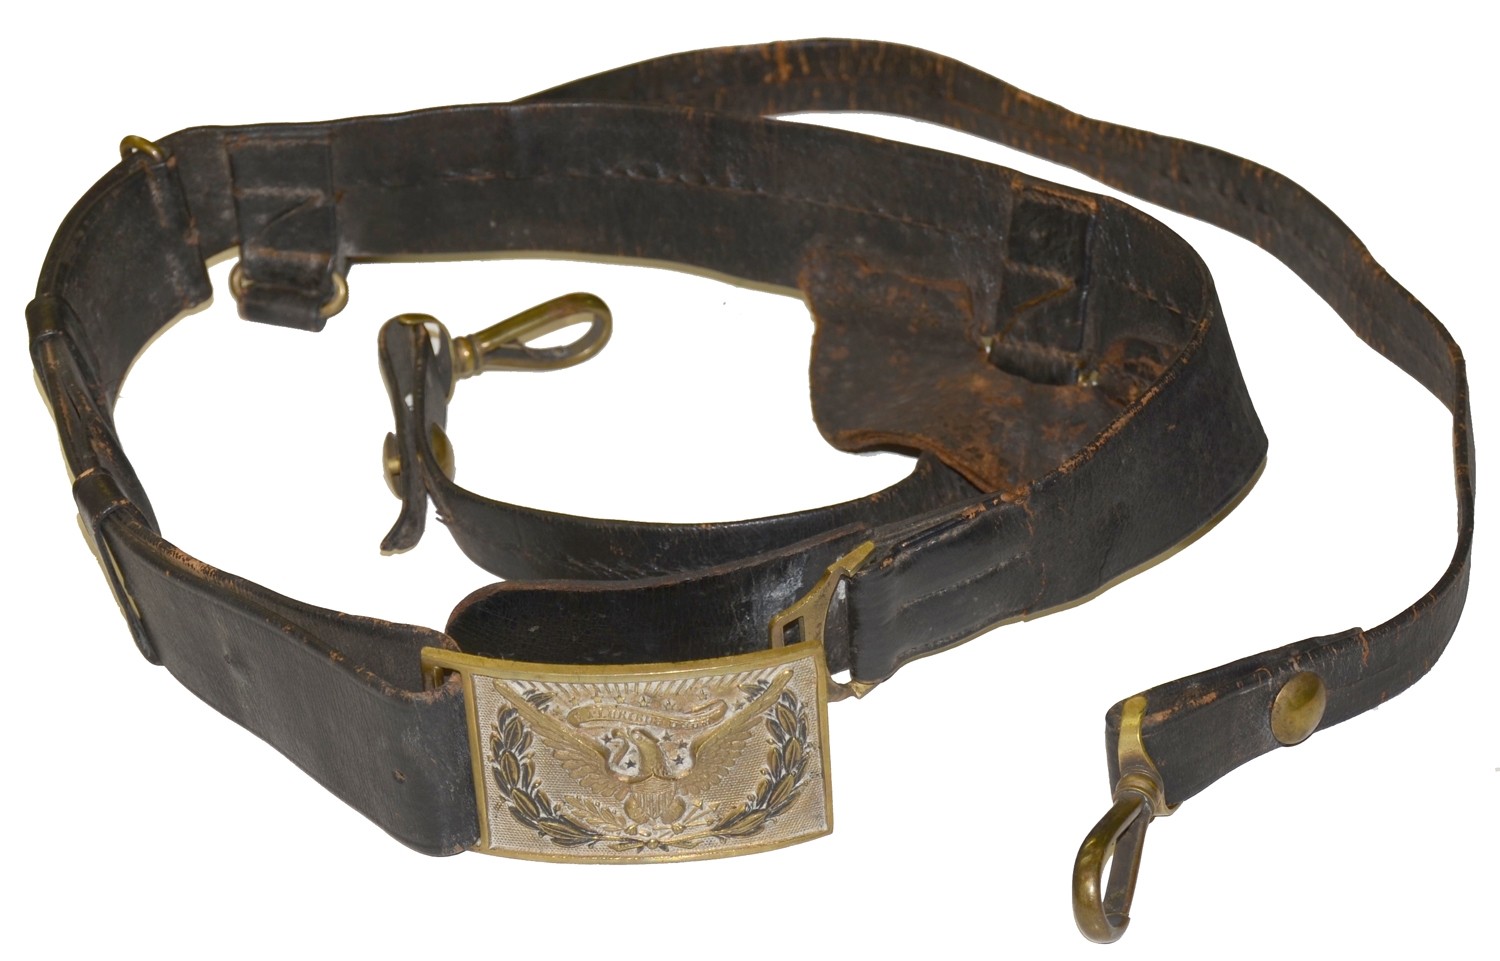 CIVIL WAR OFFICER'S SWORD BELT WITH PATTERN 1851 BUCKLE — Horse